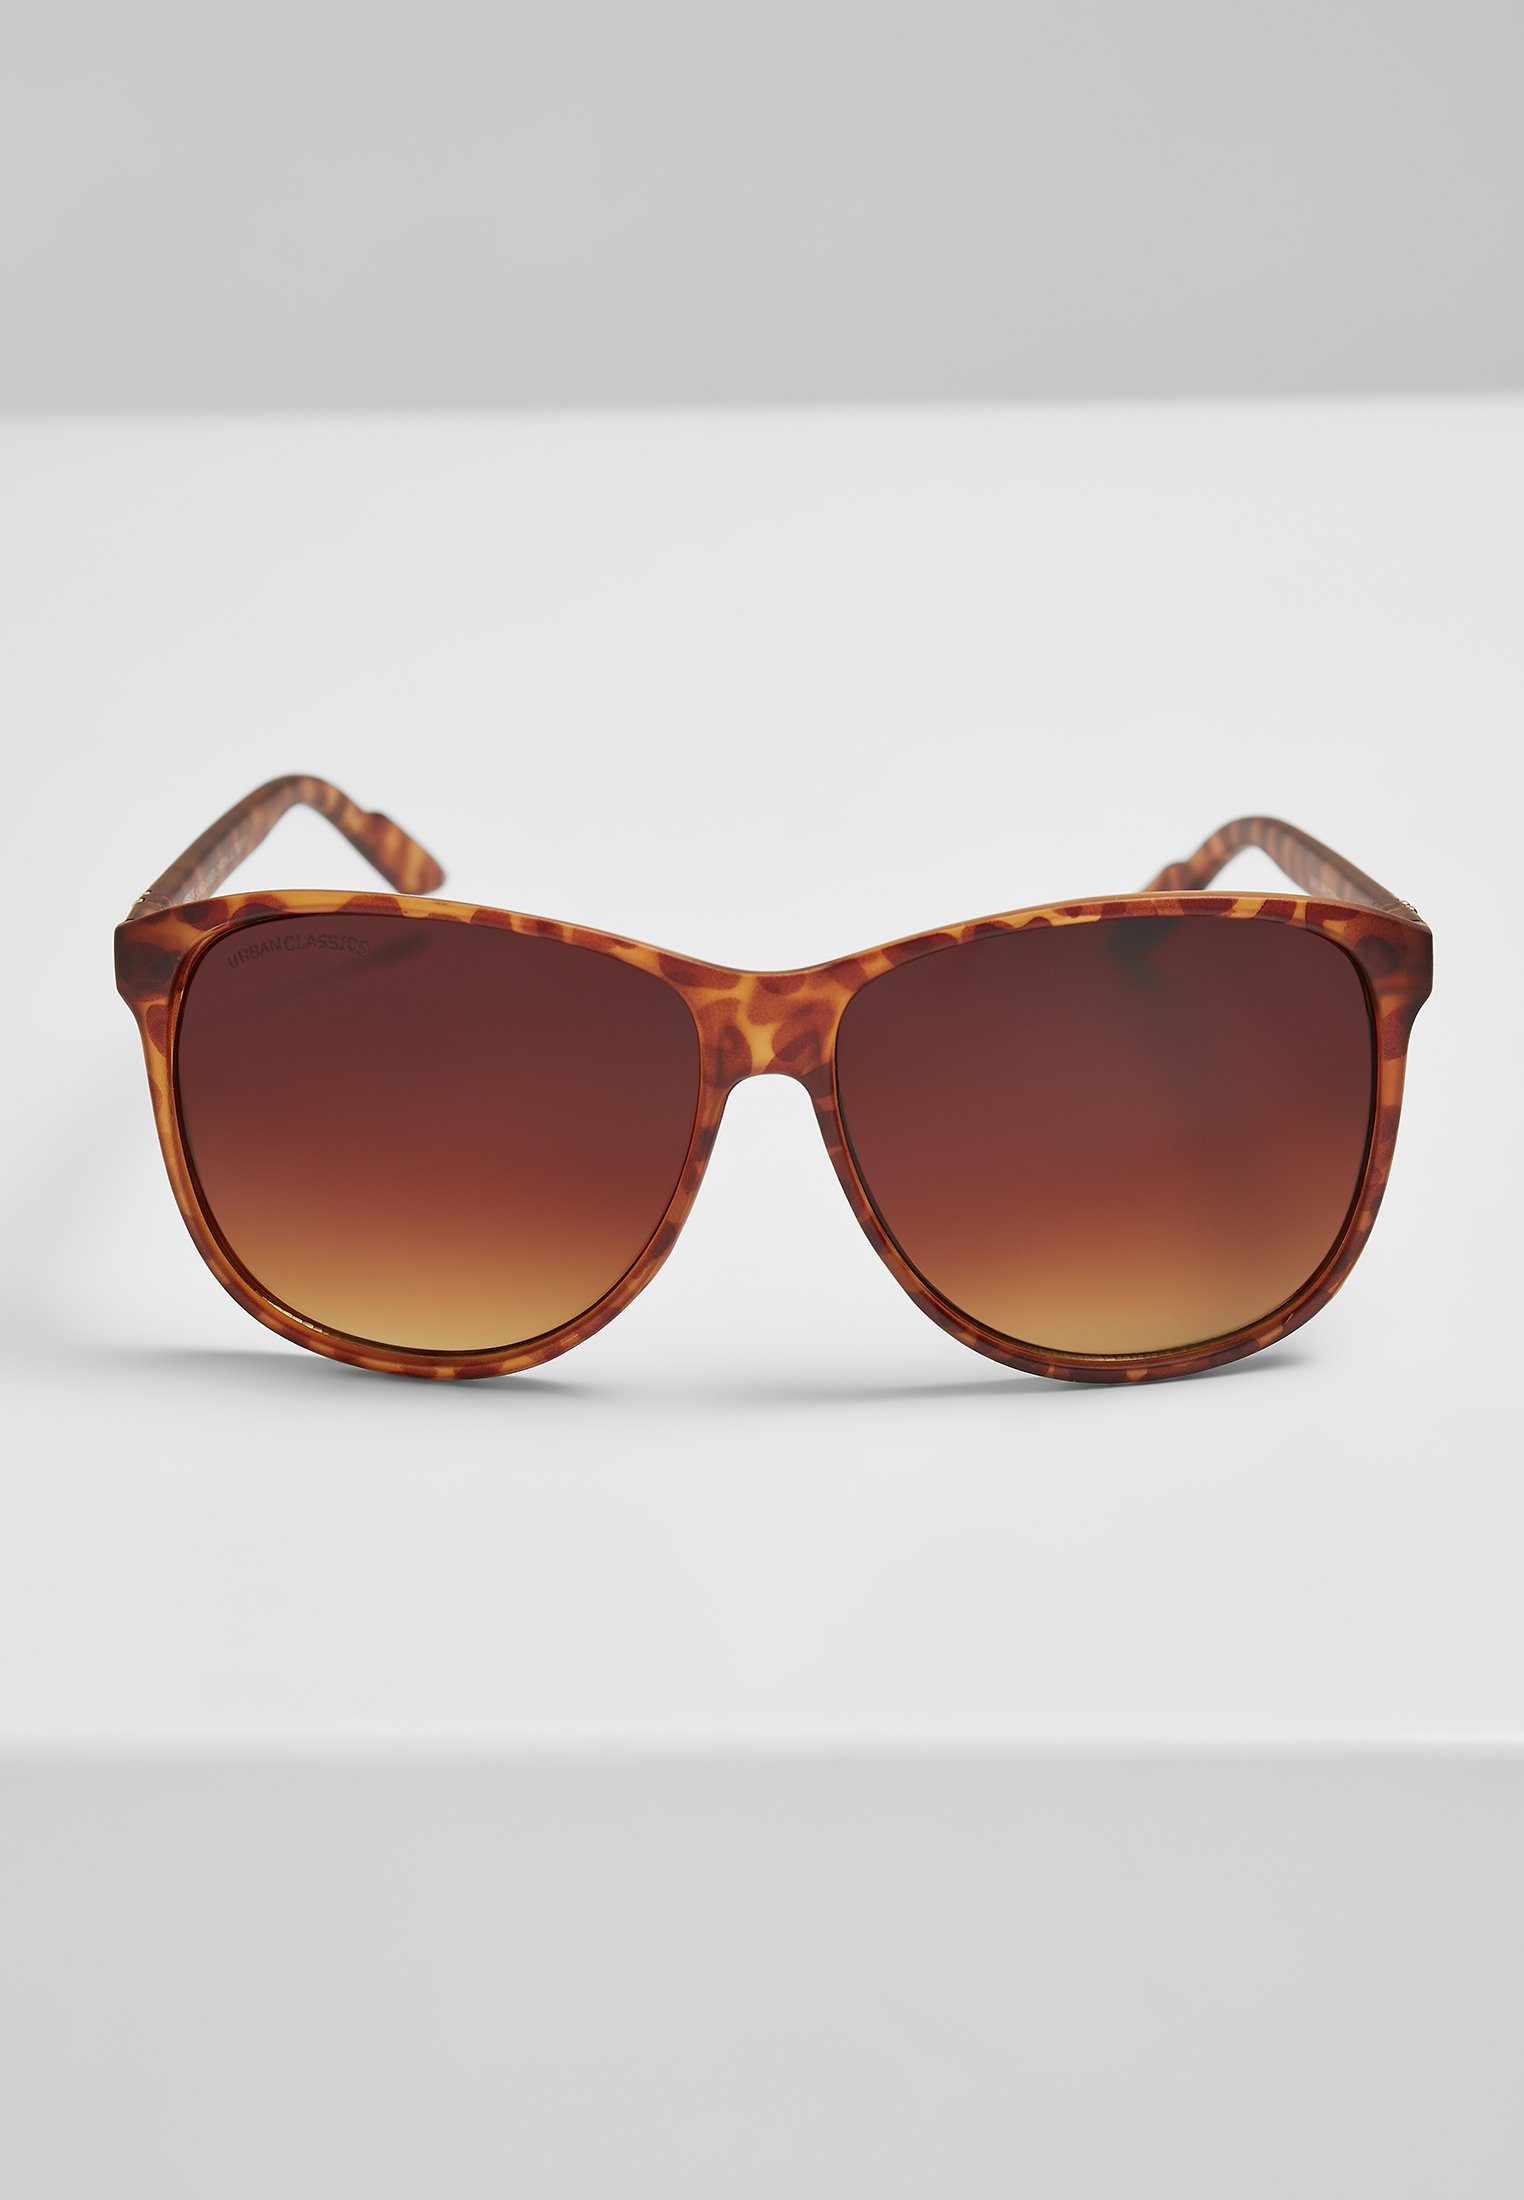 Accessoires URBAN UC Sunglasses Sonnenbrille brown CLASSICS Chirwa leo